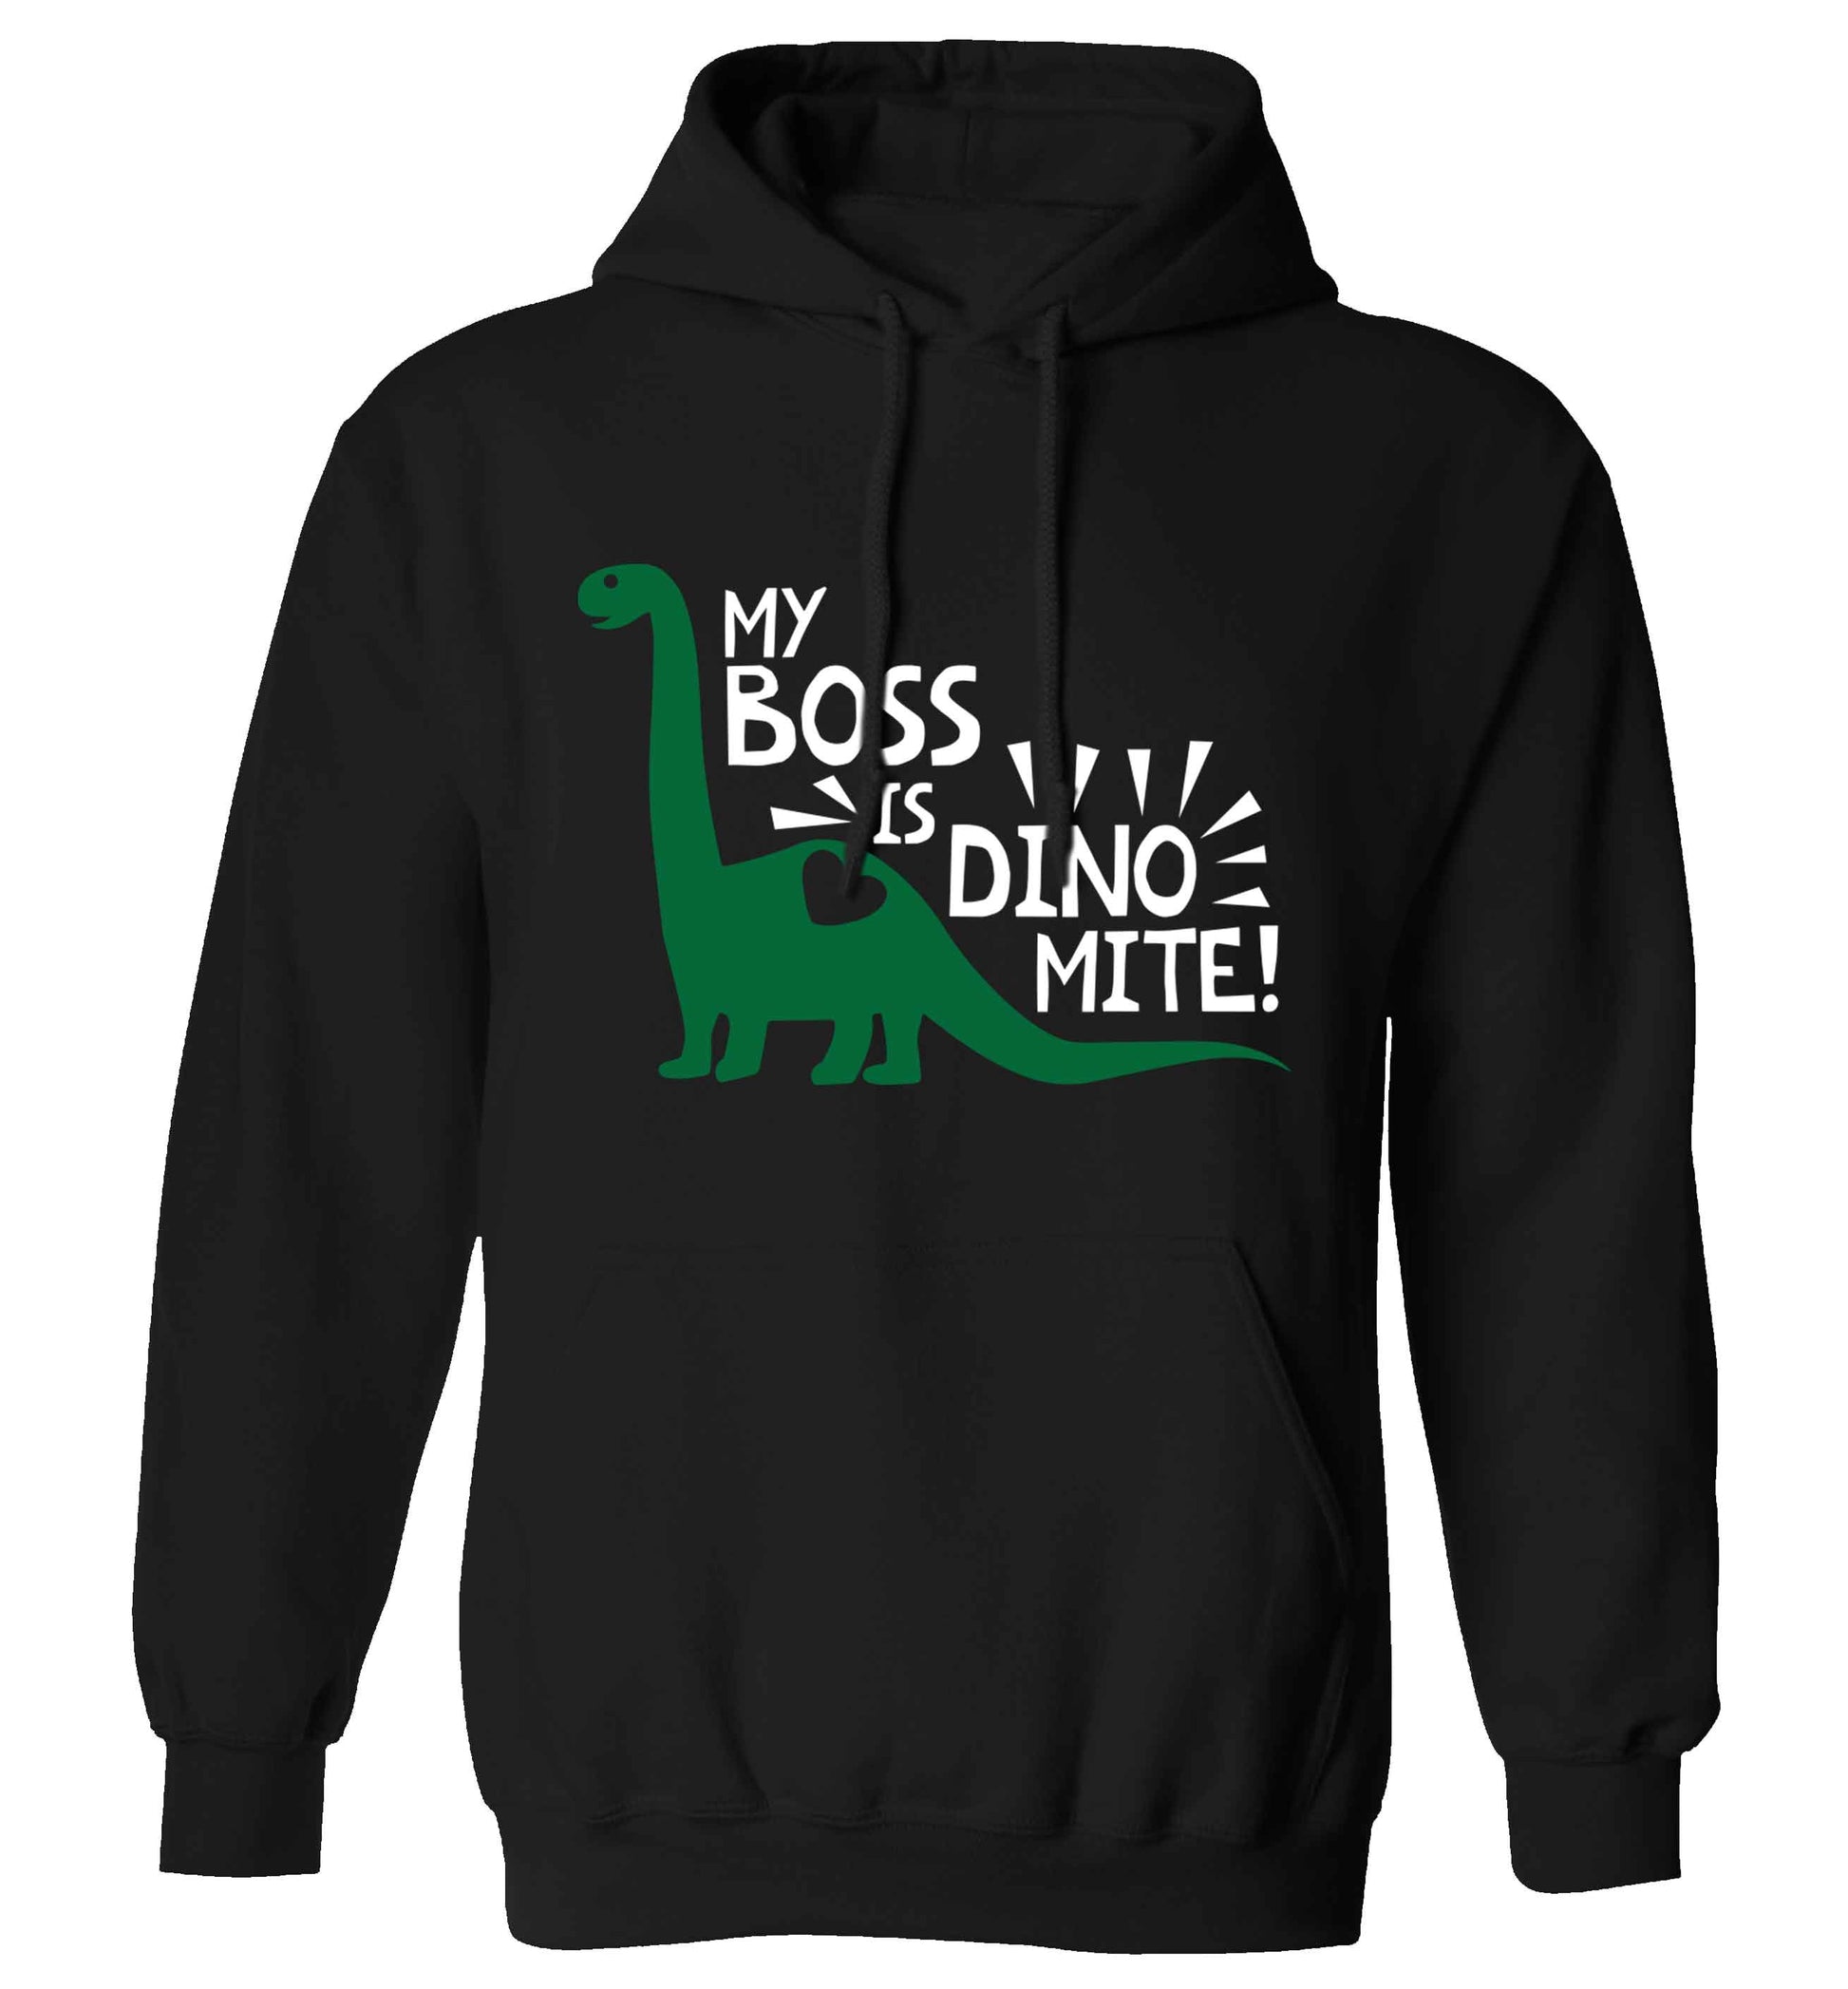 My boss is dinomite! adults unisex black hoodie 2XL